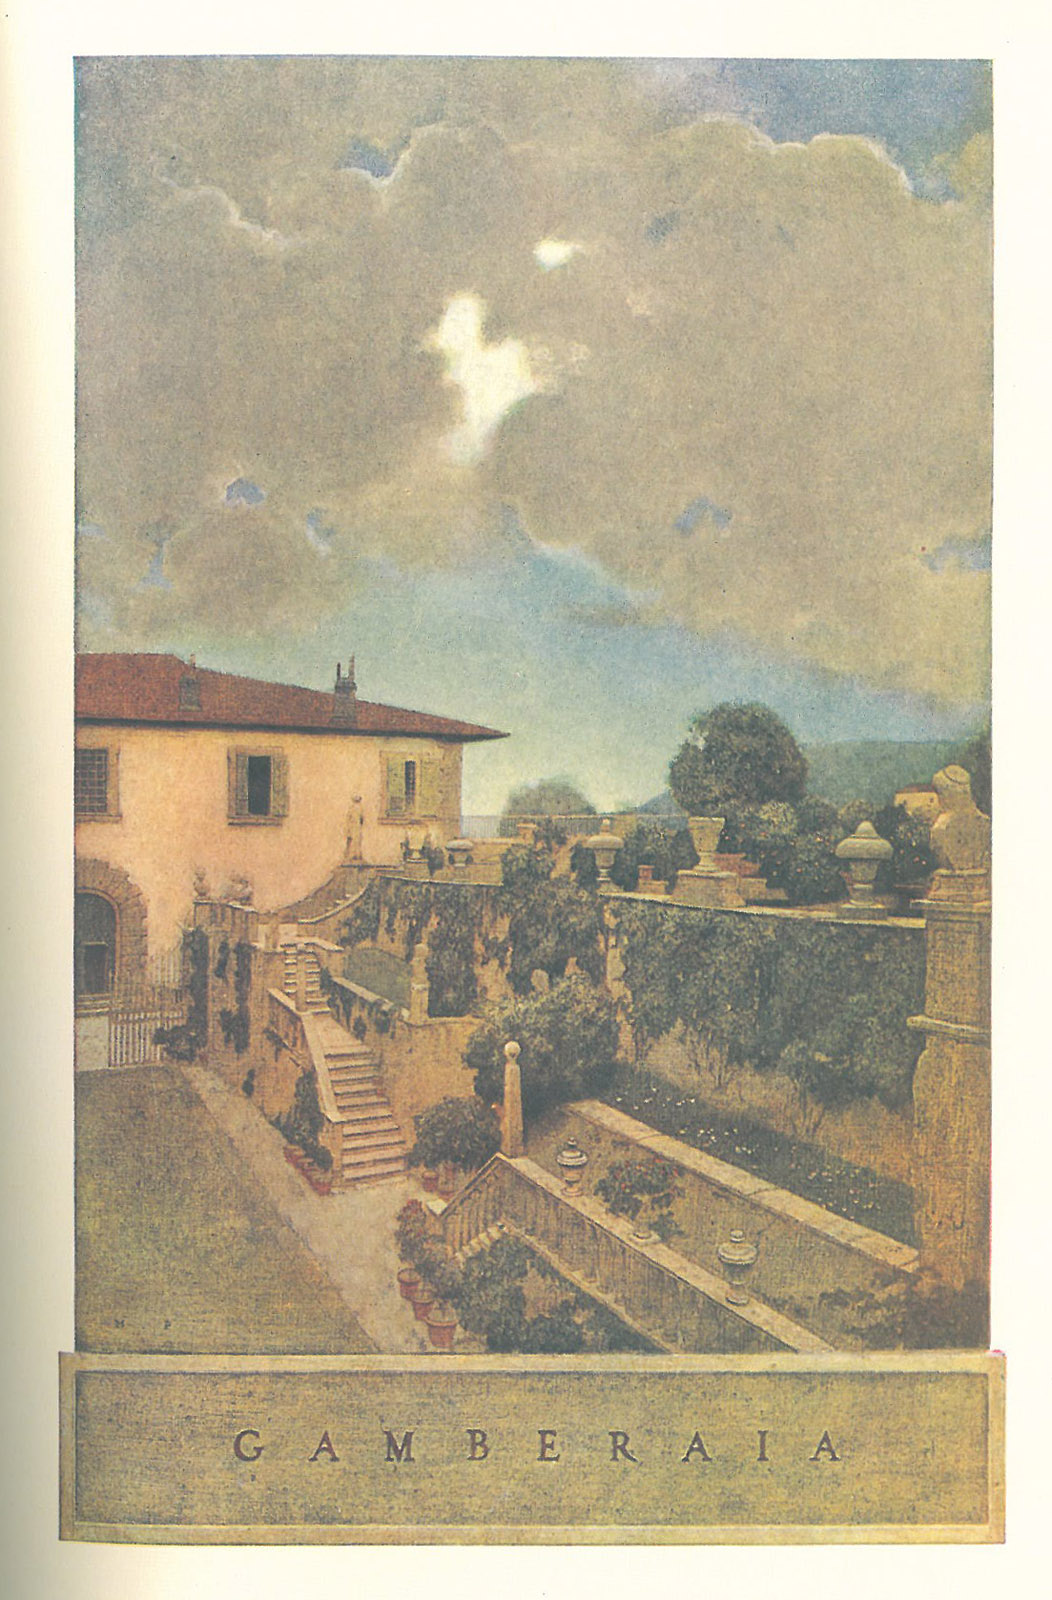 Maxfield Parrish's illustration of the Gardens at Villa Gamberaia